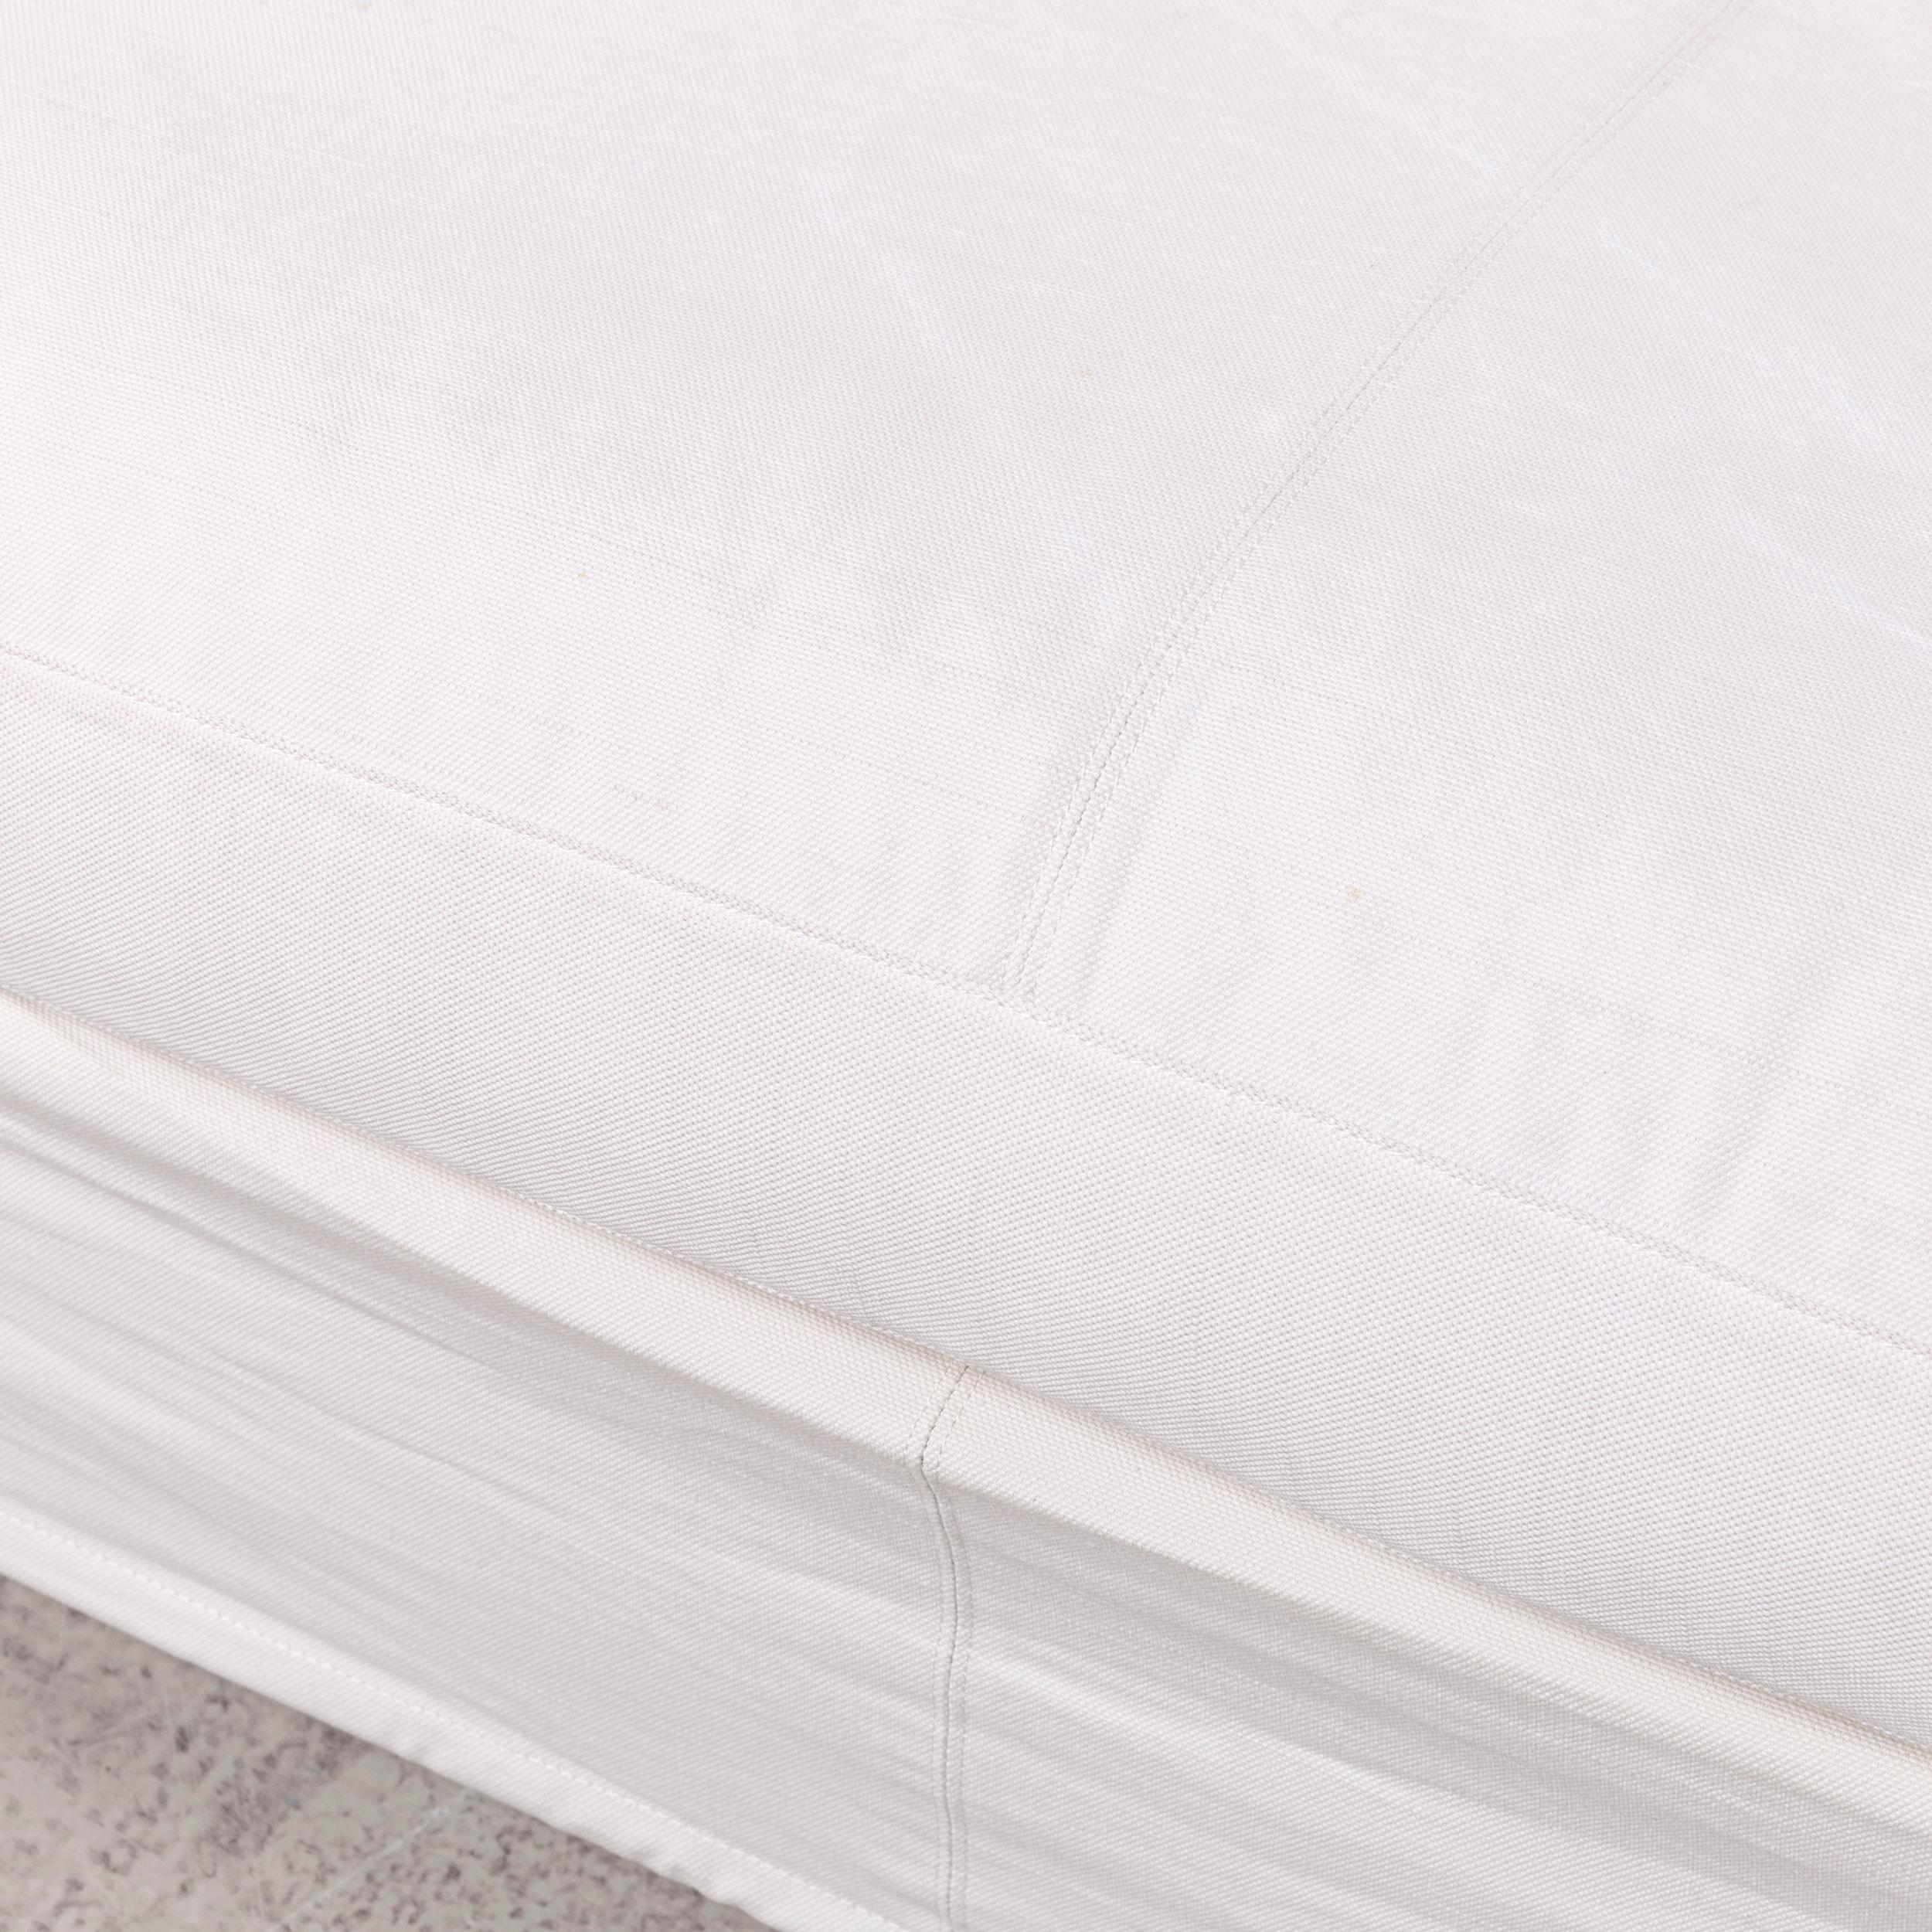 Italian B & B Italia Baisity Designer Fabric Sofa White by Antonio Citterio Two-Seat For Sale